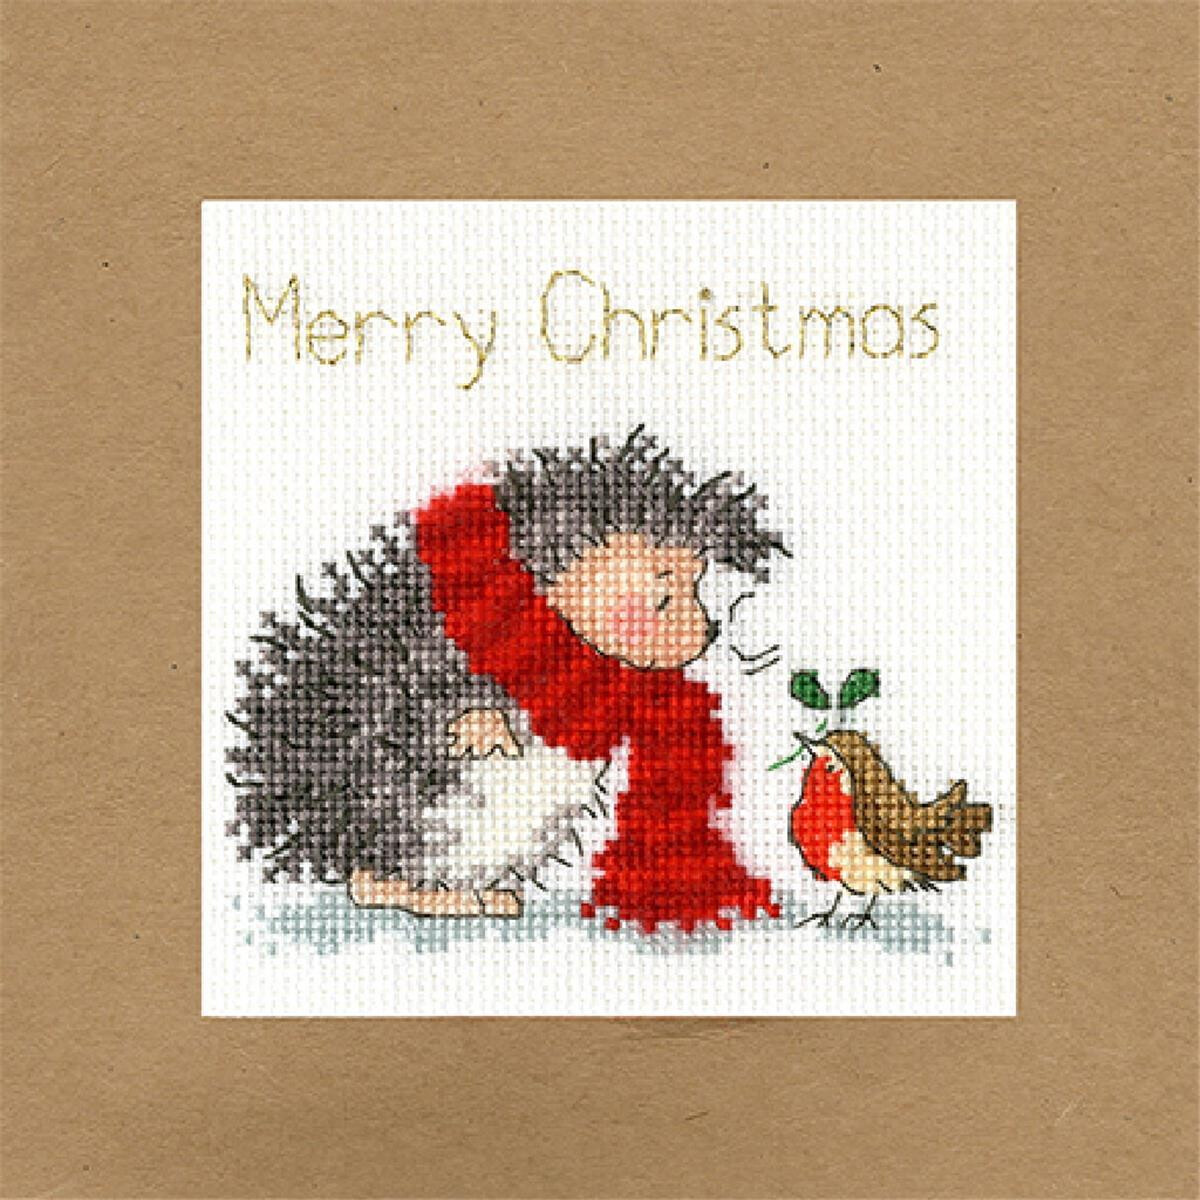 A festive illustration on a brown card shows a hedgehog...